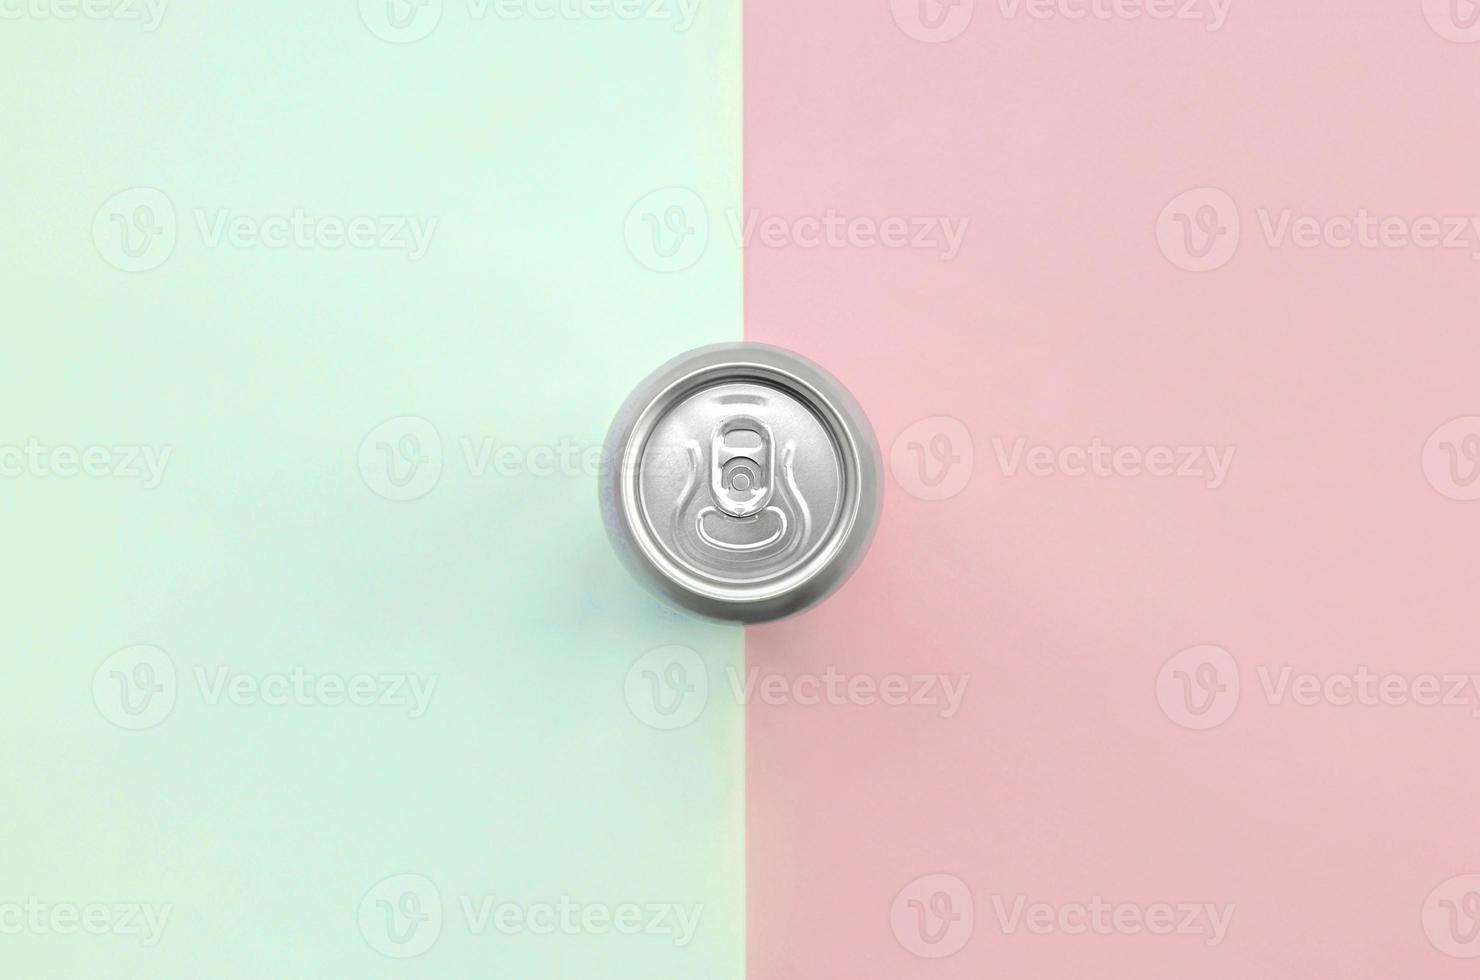 lata de cerveja metálica em fundo de textura de moda pastel turquesa e cores rosa foto